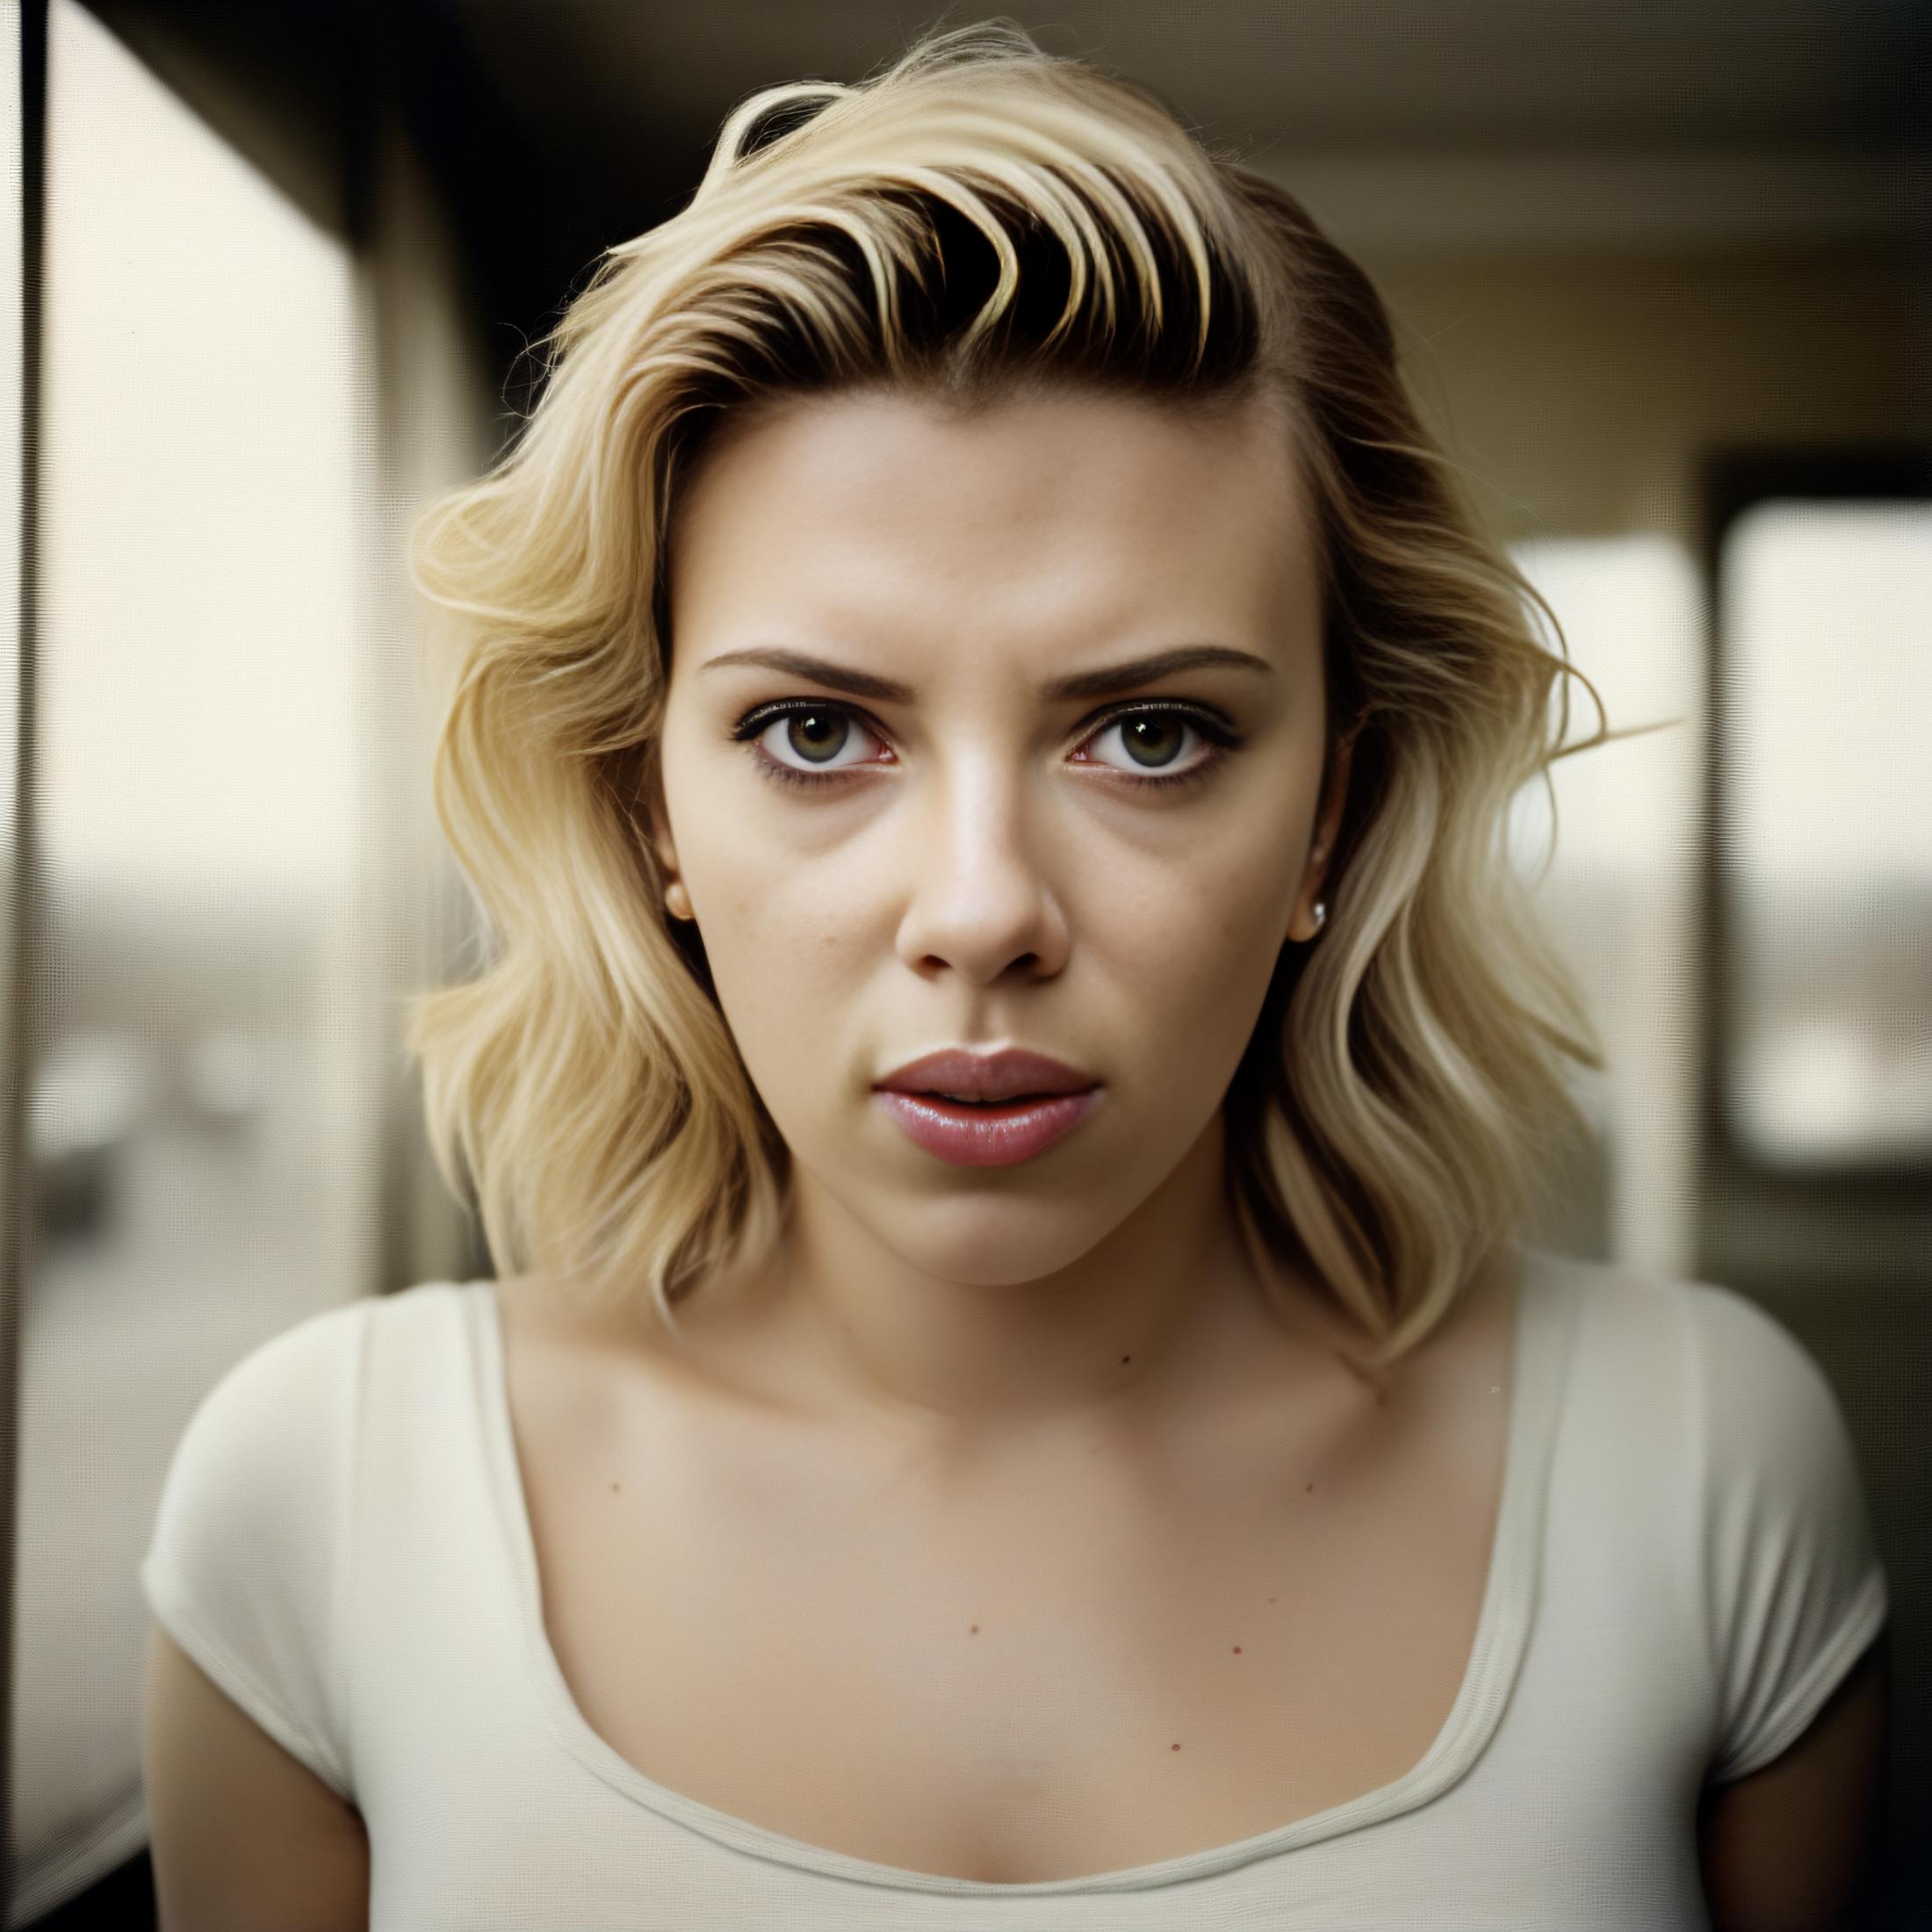 Scarlett Johansson image by parar20